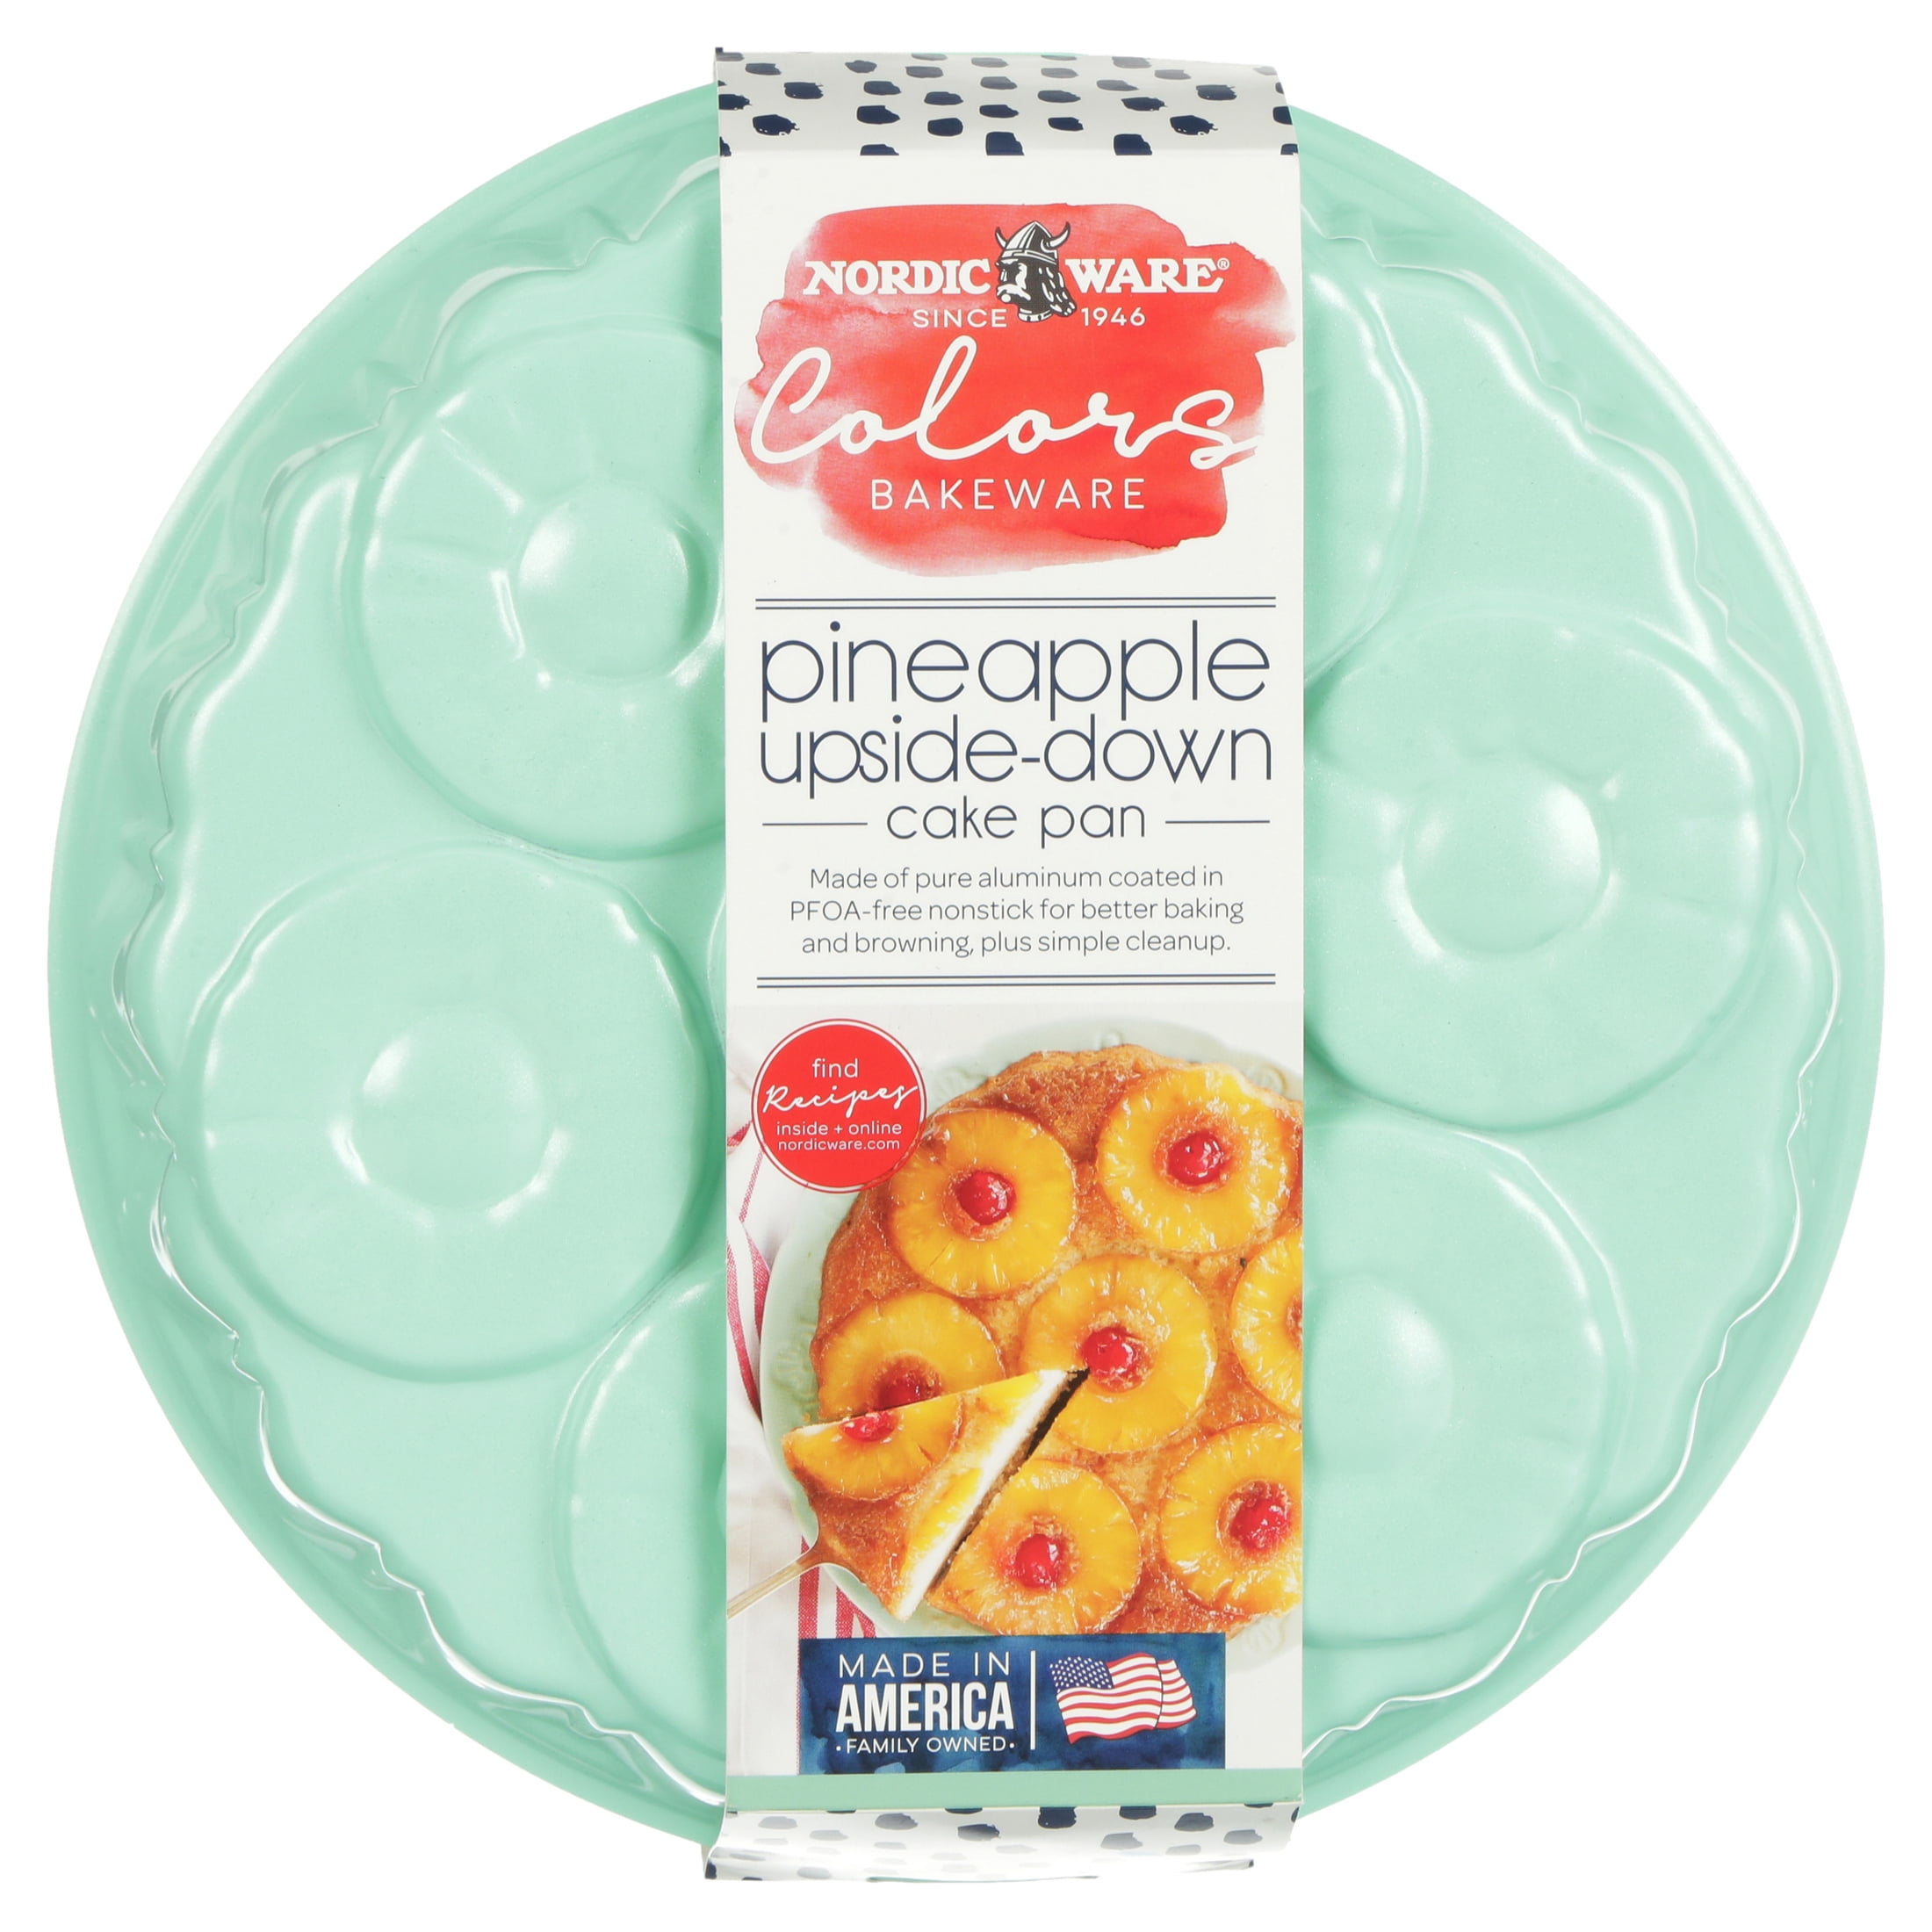  Nordic Ware Cake Pan Pineapple Upsidedown, 8-cup, Sea